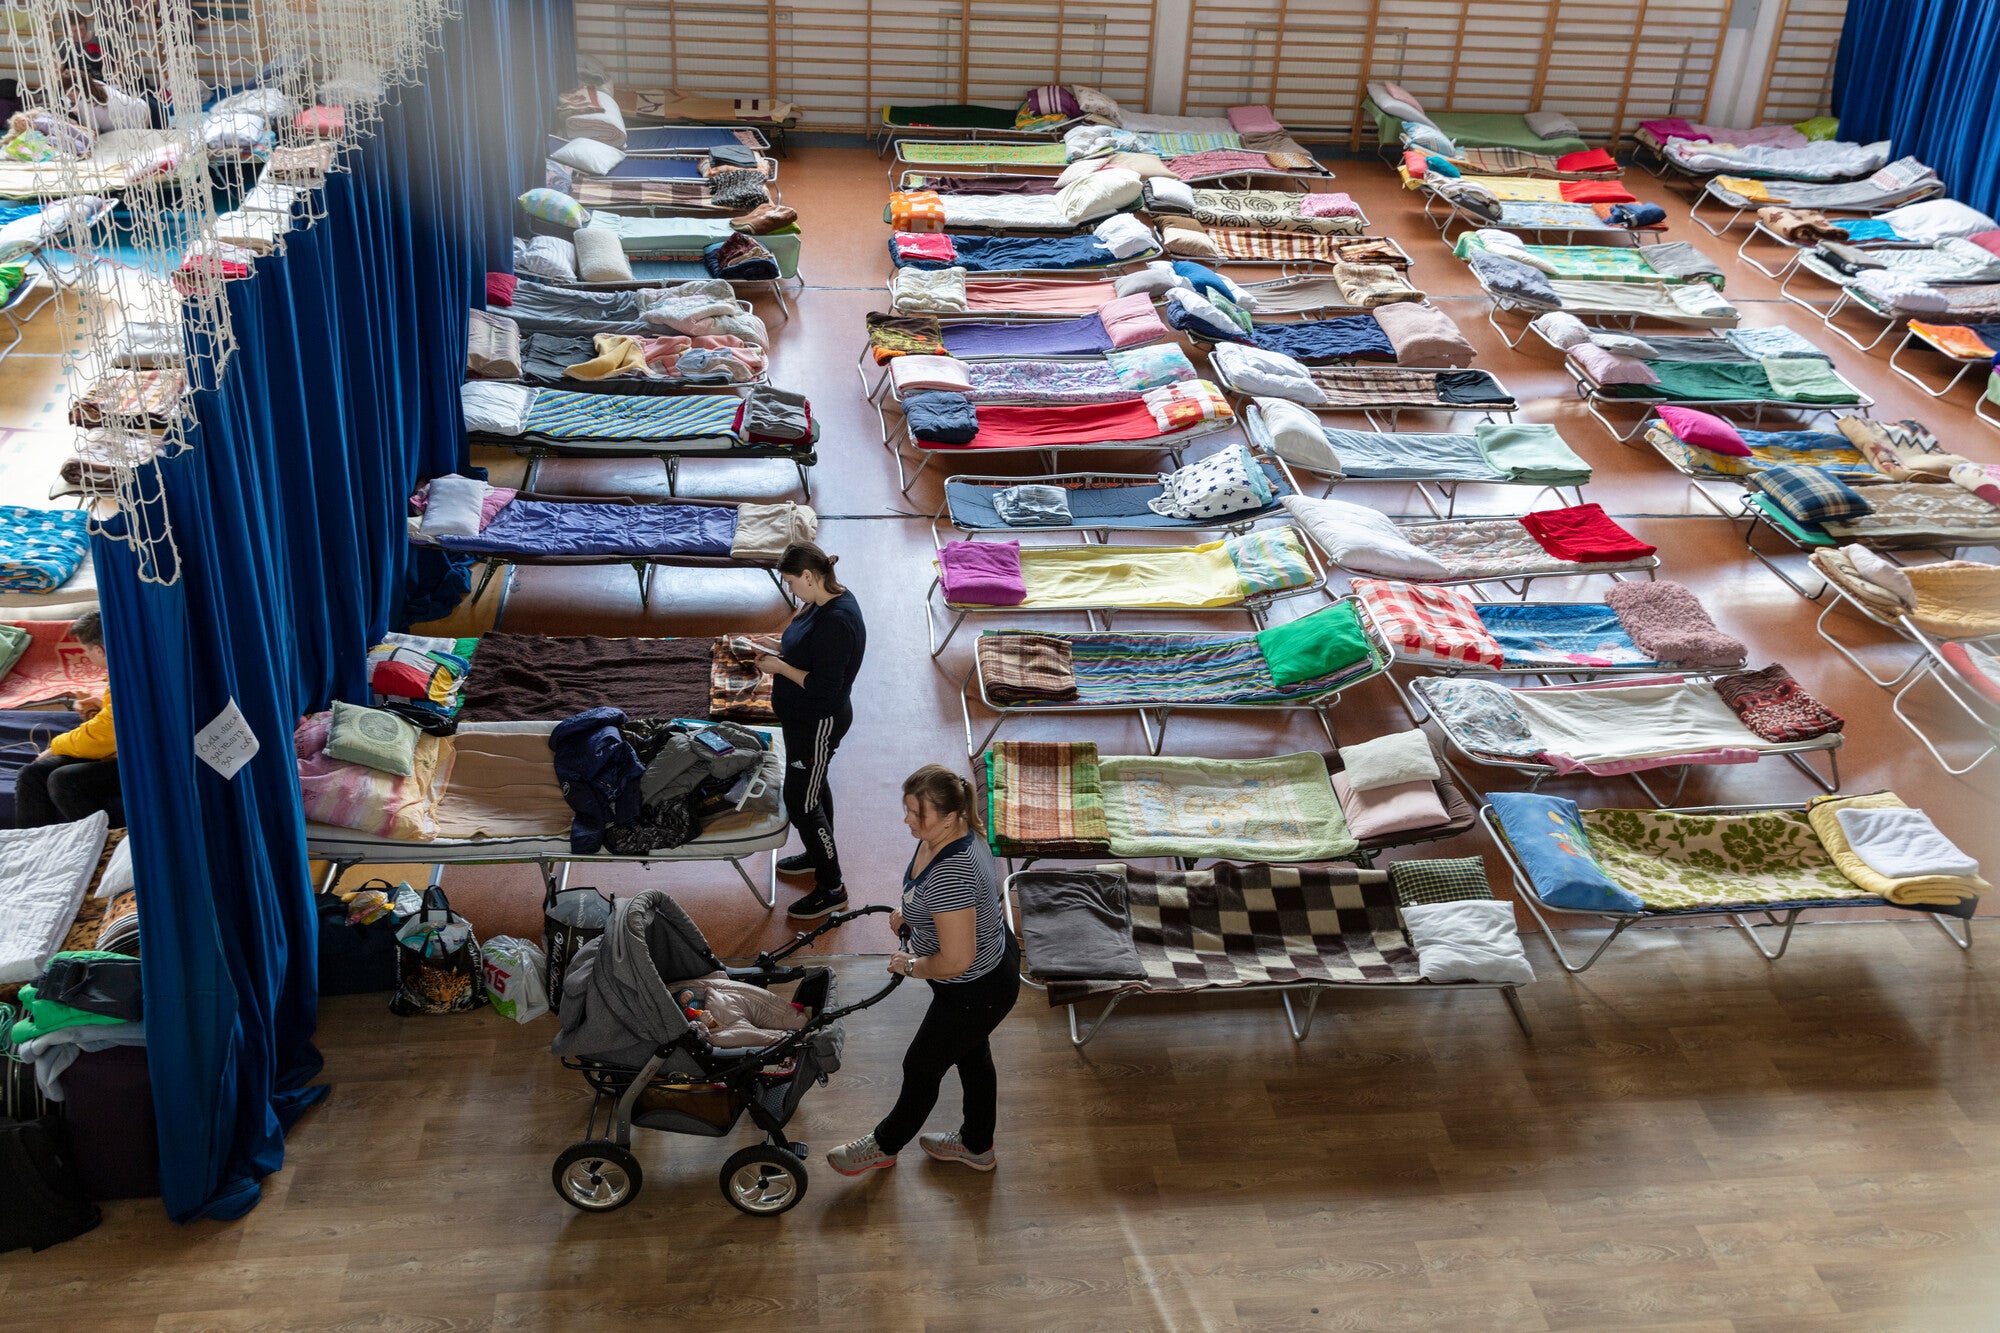 A school gym, Hala Sportowa, Przy Szkole Podstawowej, serves as temporary housing for refugees in the Polish border own, Hrebrenne.